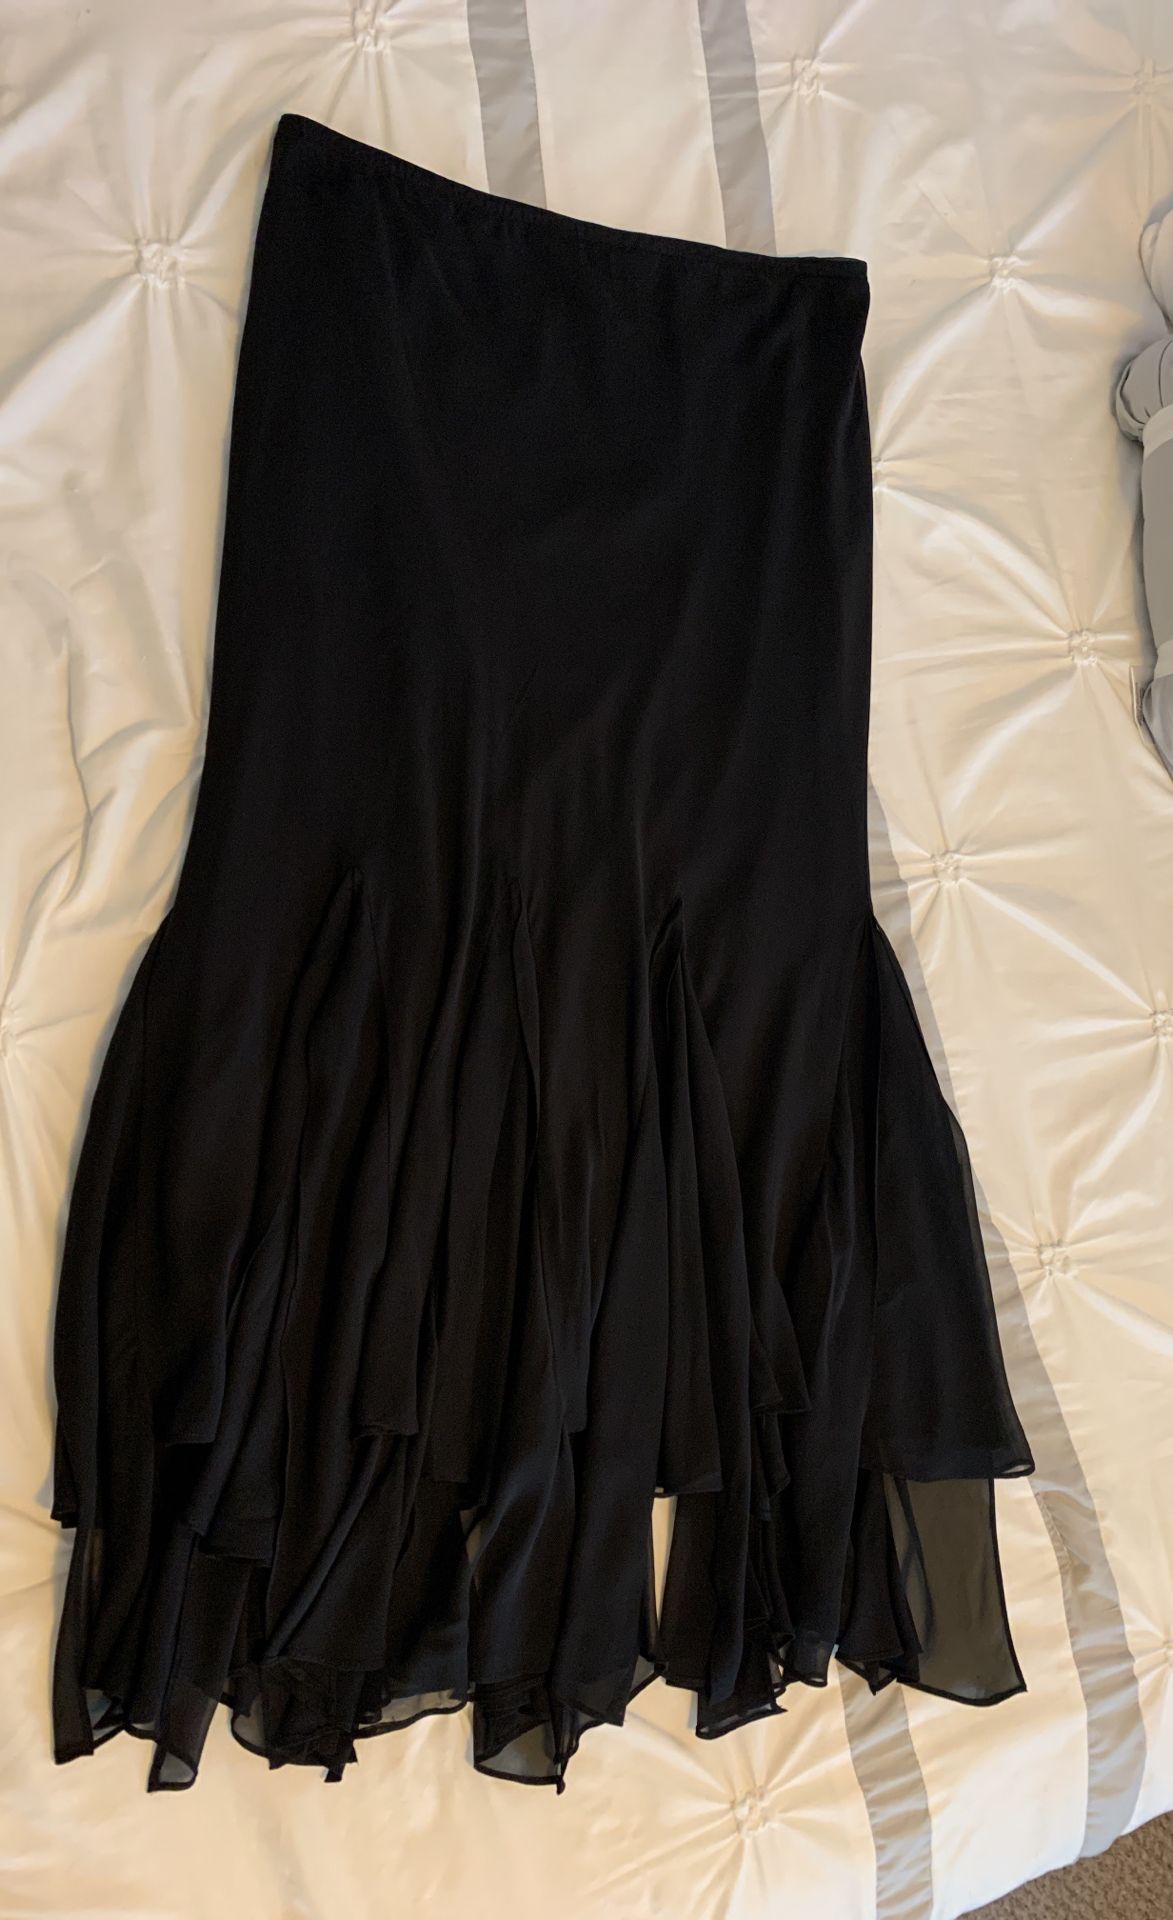 JBS Black Skirt Or Dress. Size 14